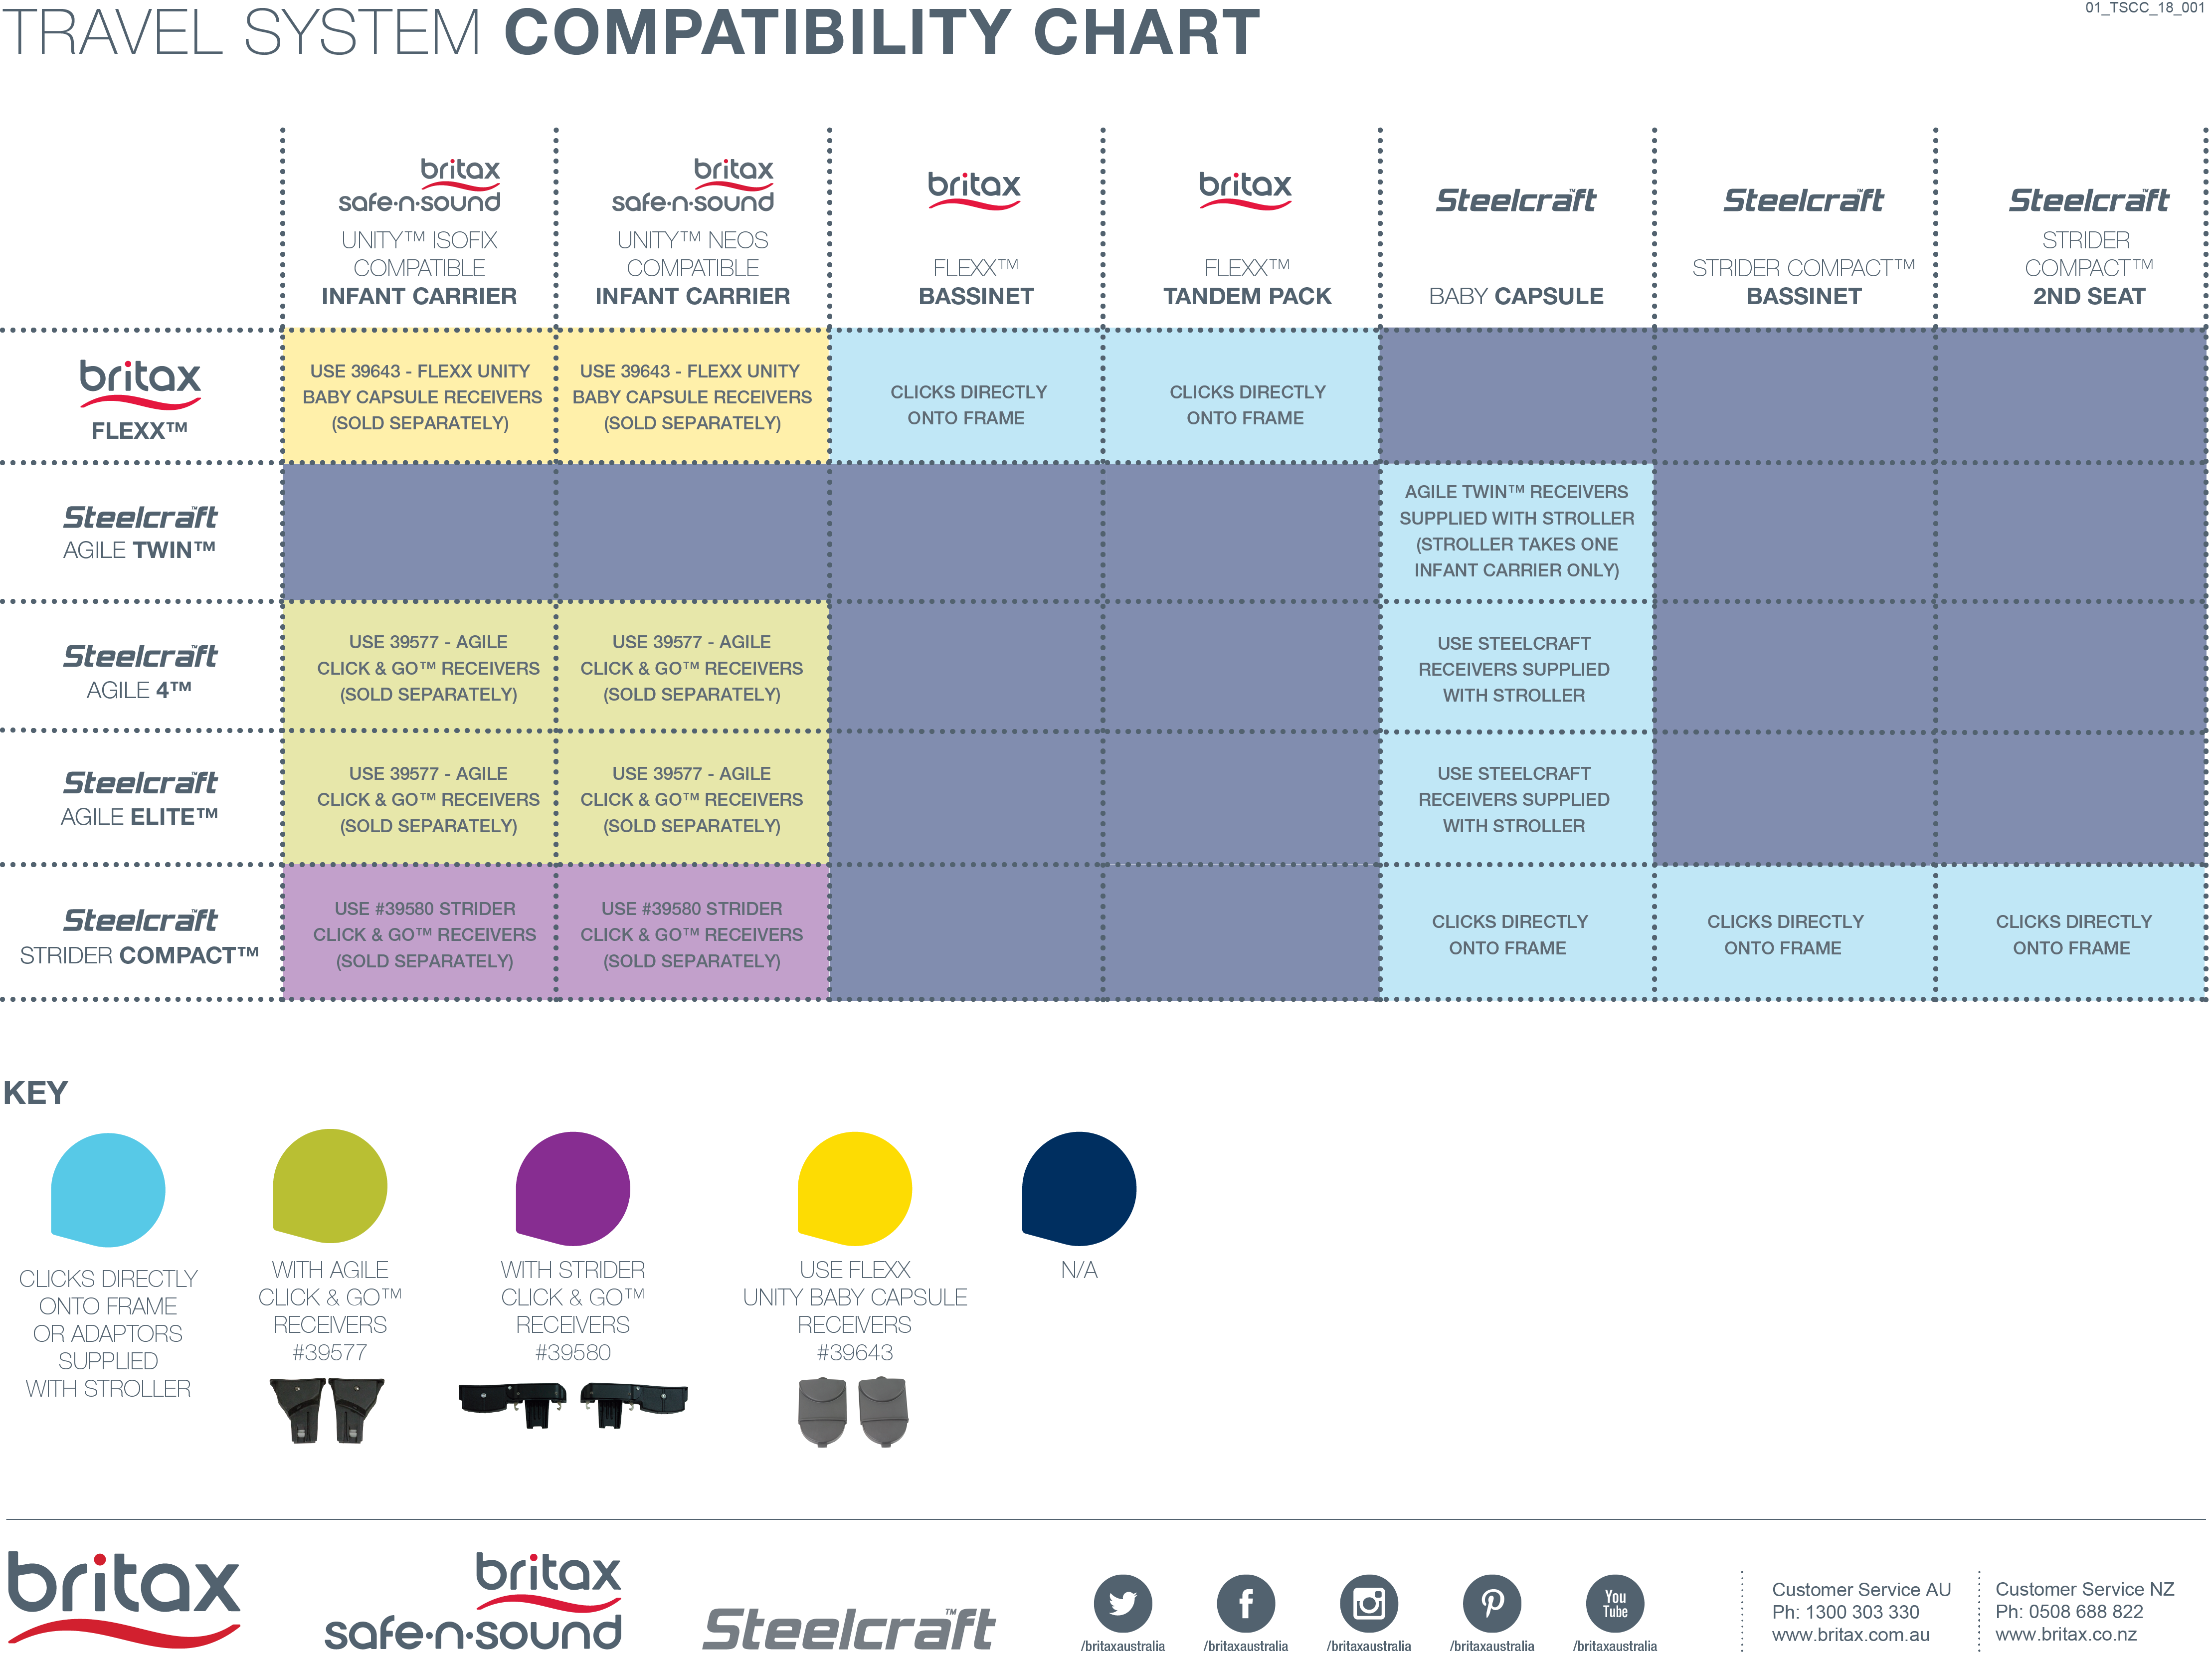 Britax Compatibility Chart